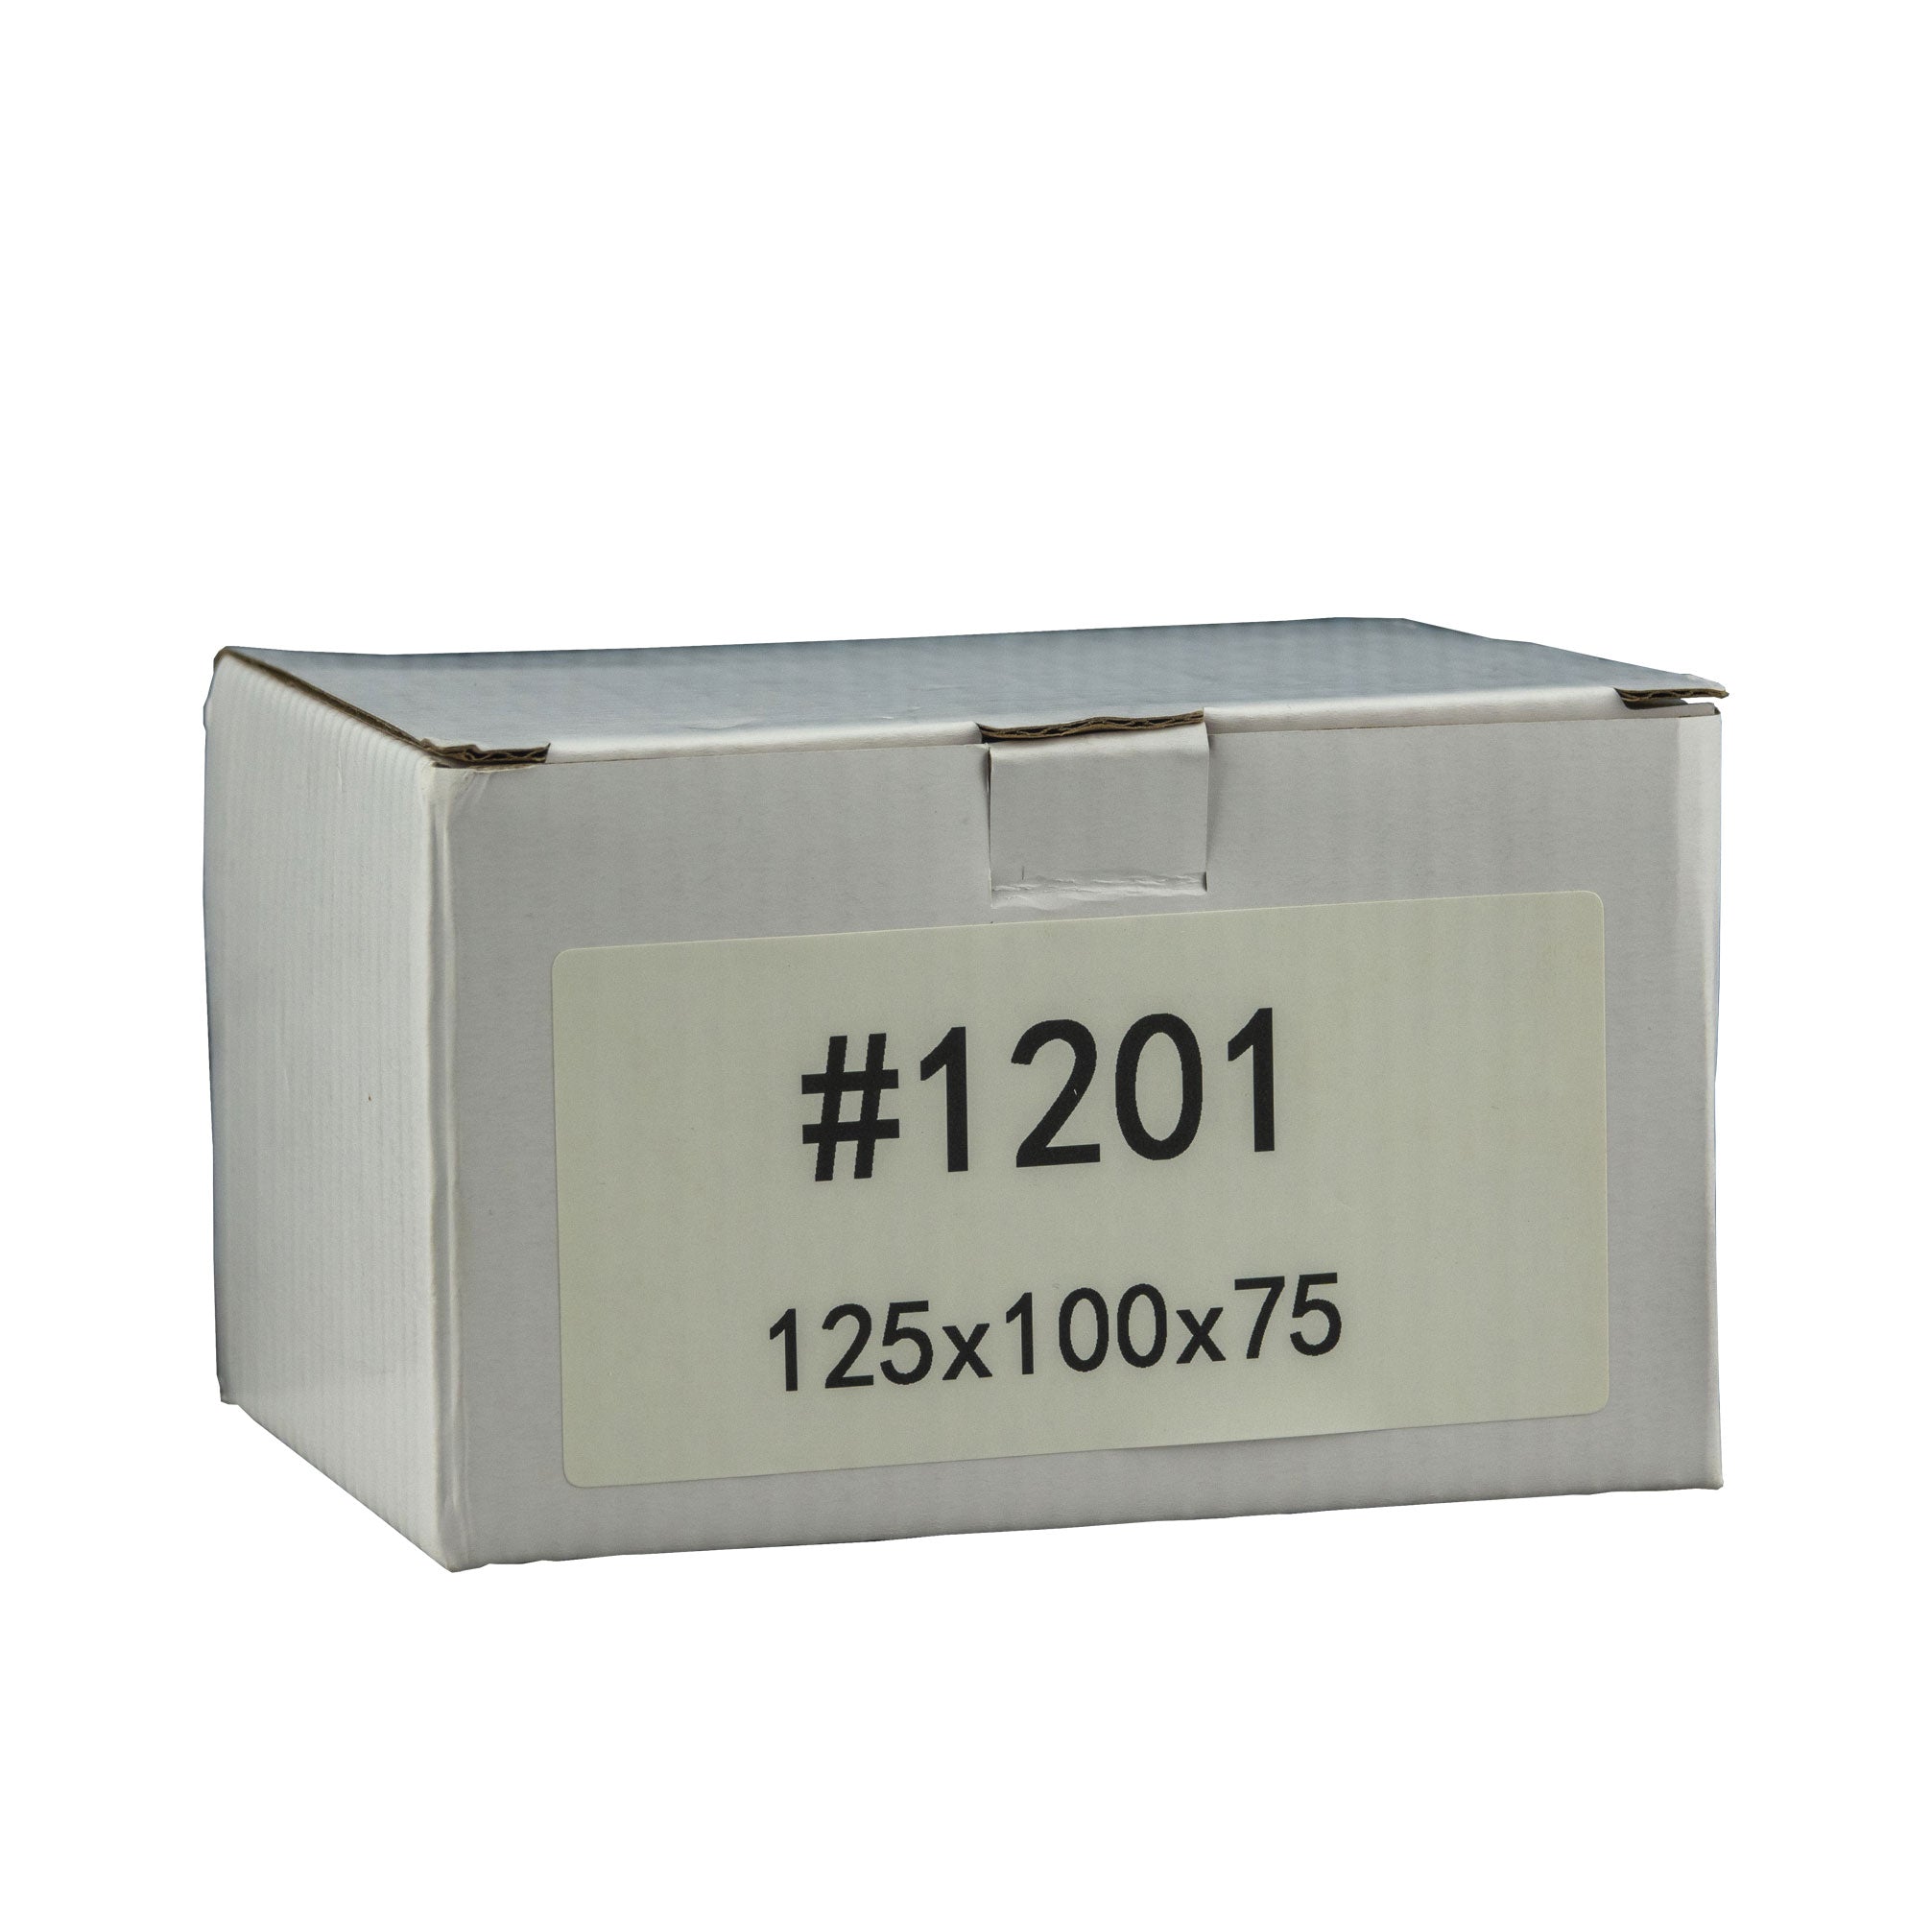 125mm x 100mm x 75mm White Carton Cardboard Shipping Box (#1201)